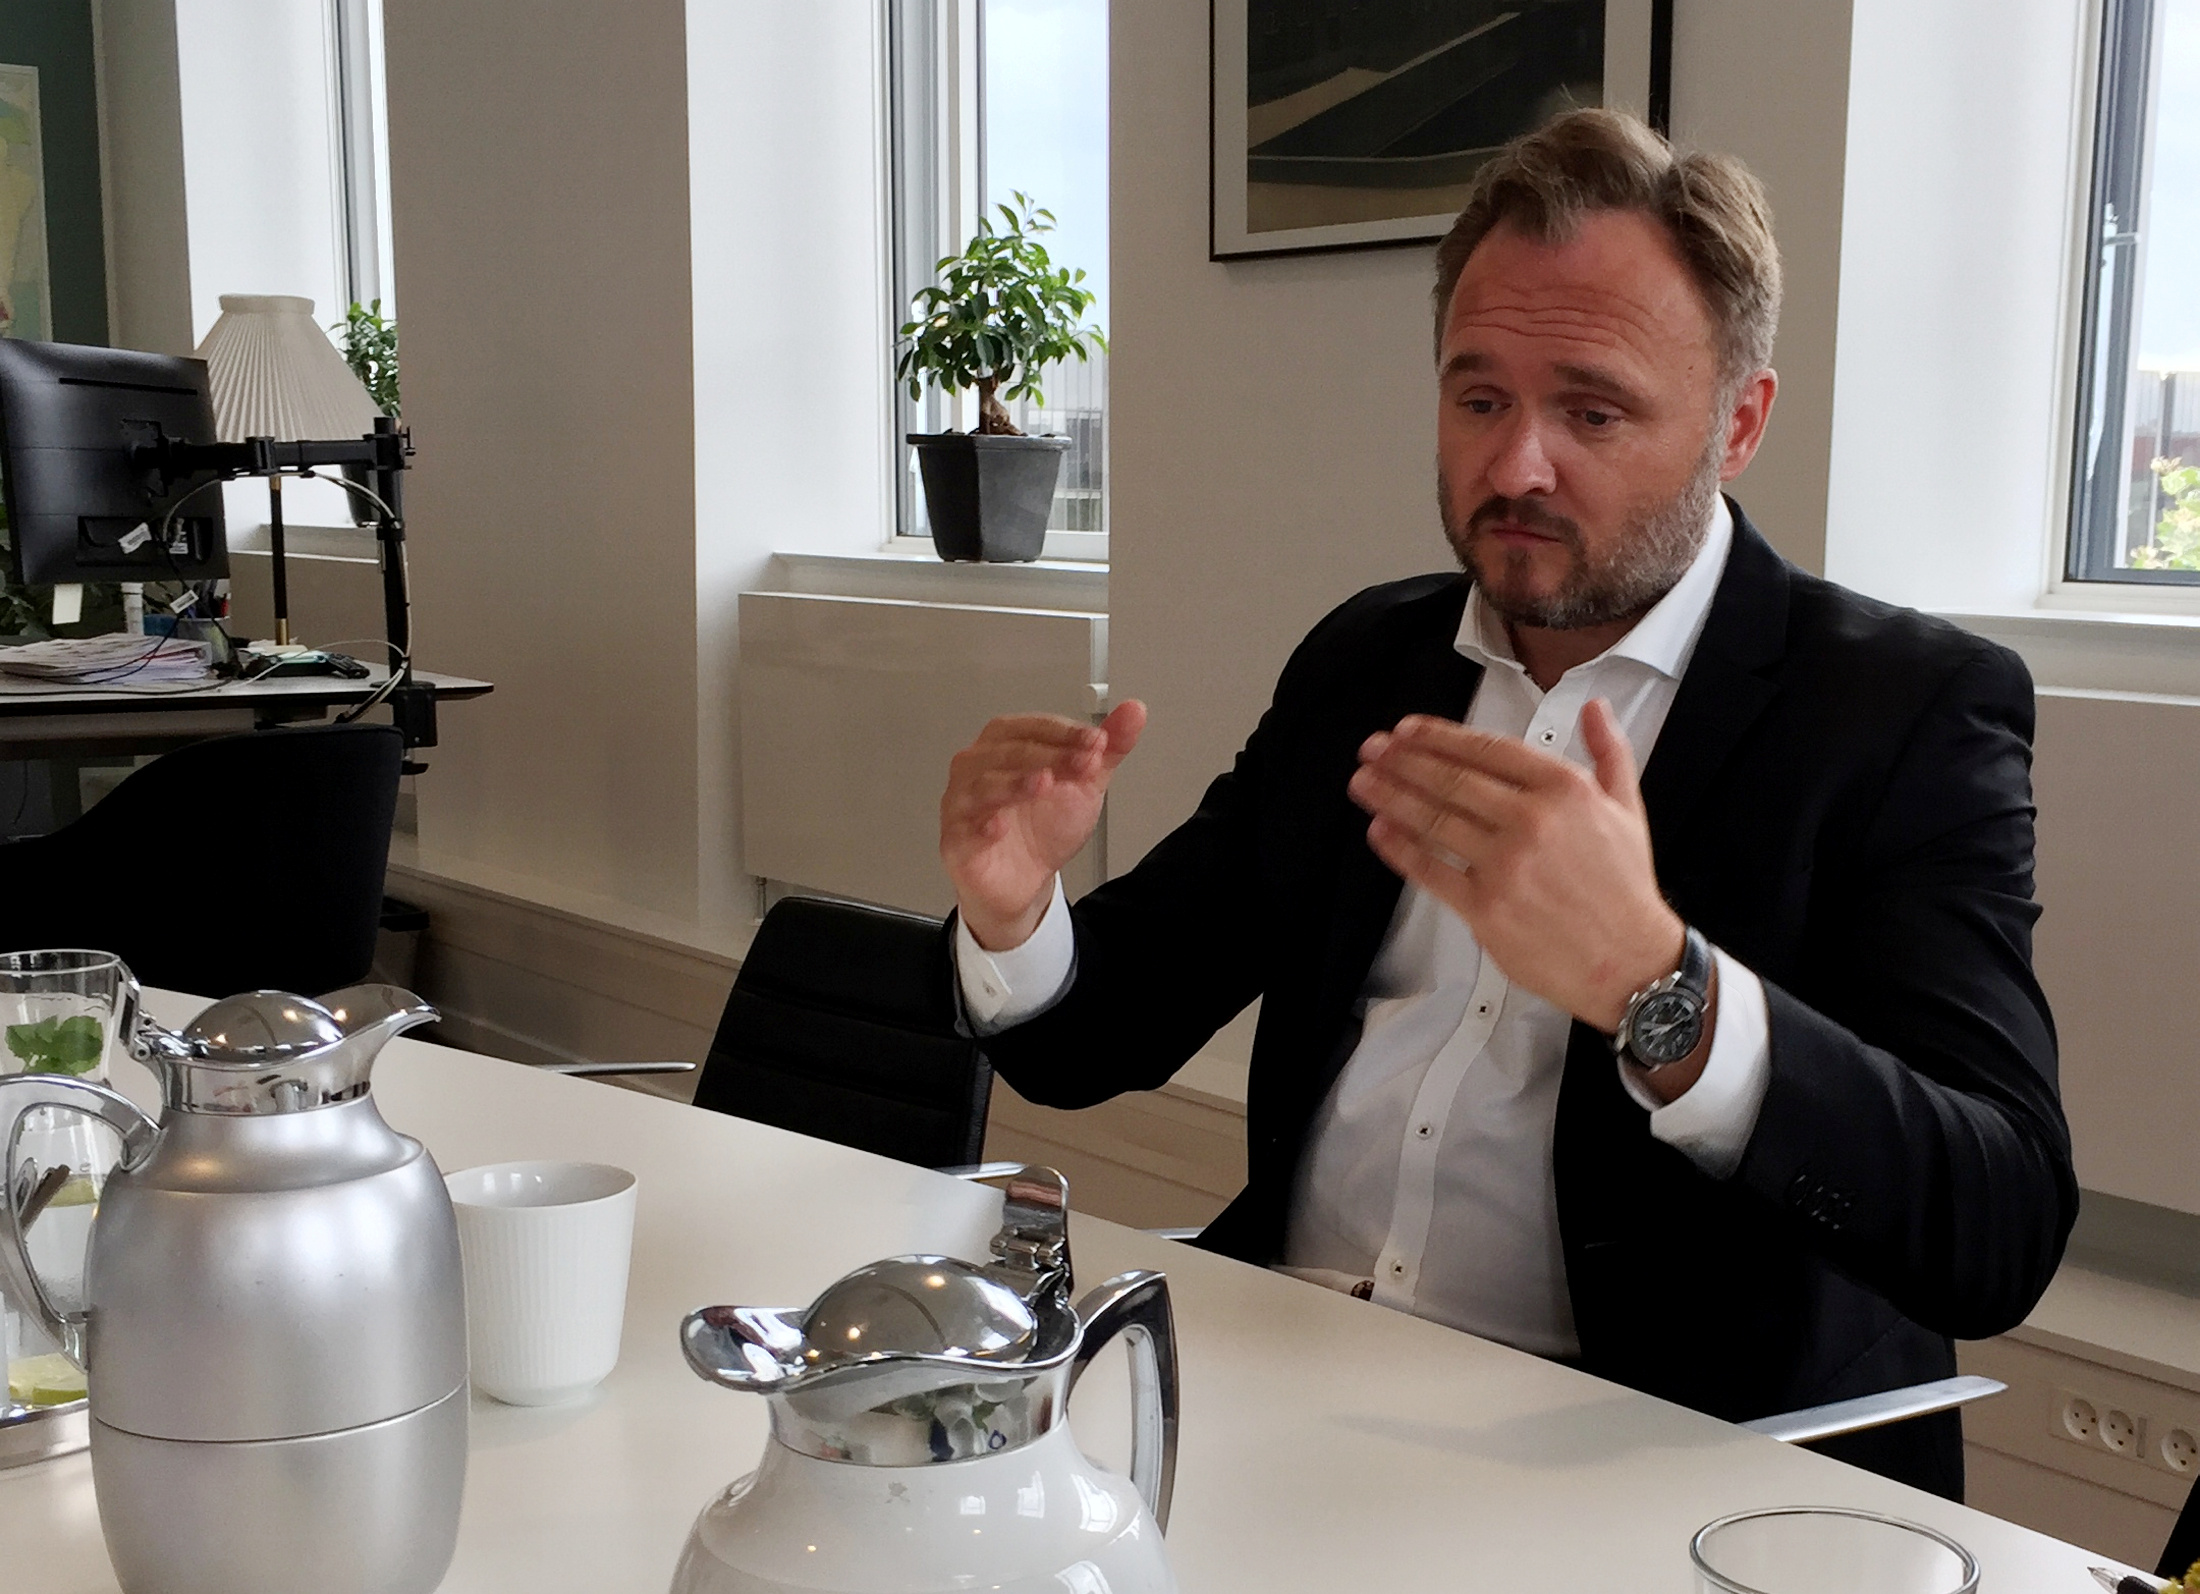 Denmark's Climate and Energy Minister Jorgensen speaks during an interview in Copenhagen